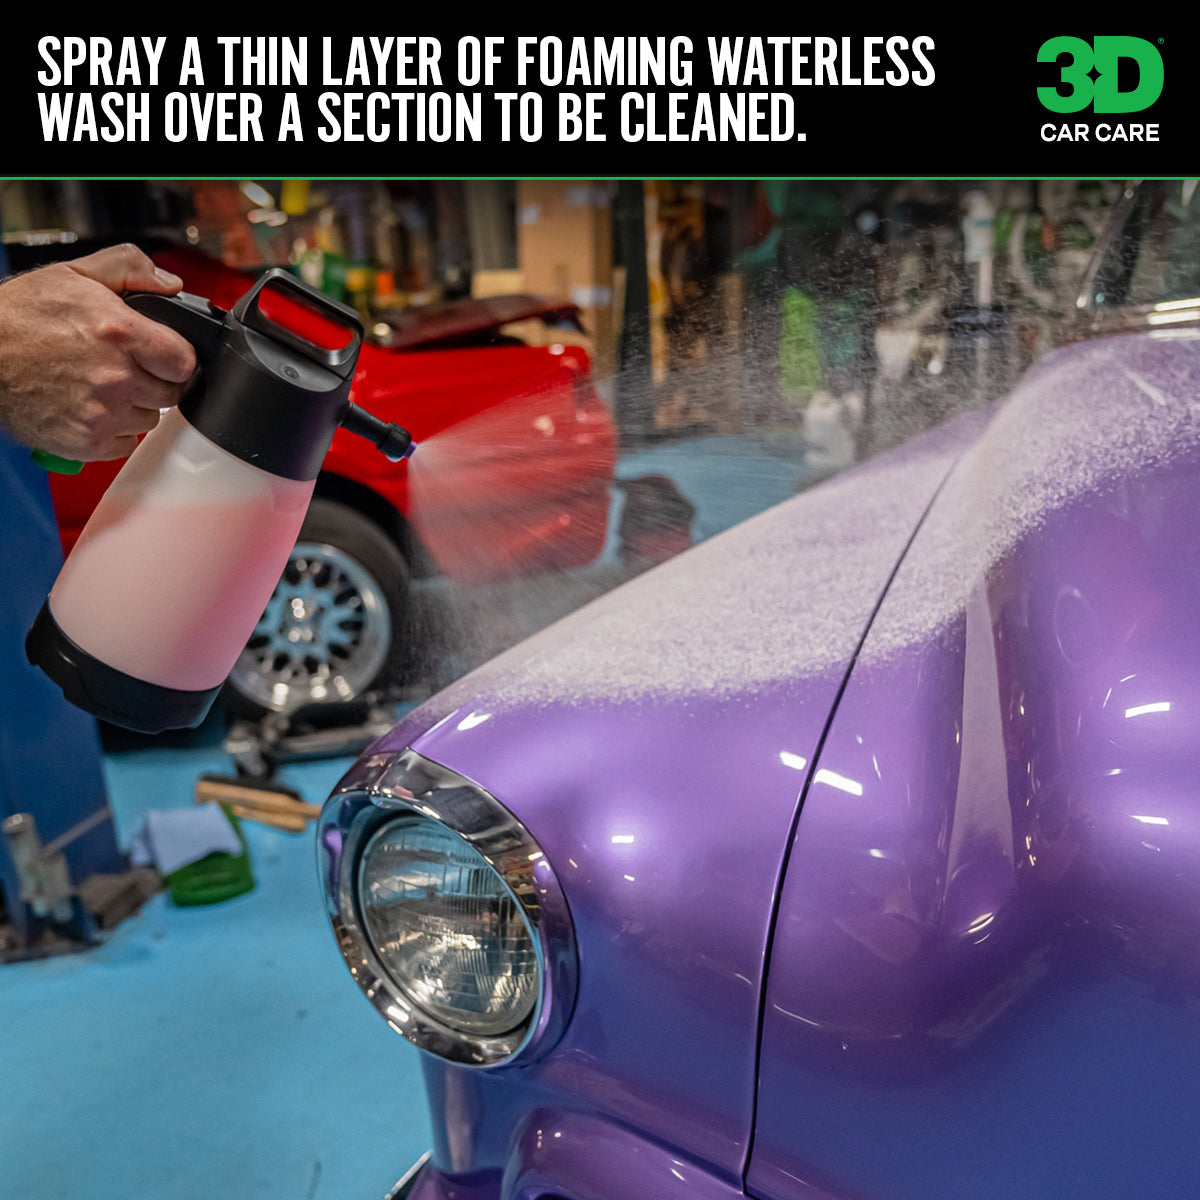 Foaming Waterless Car Wash